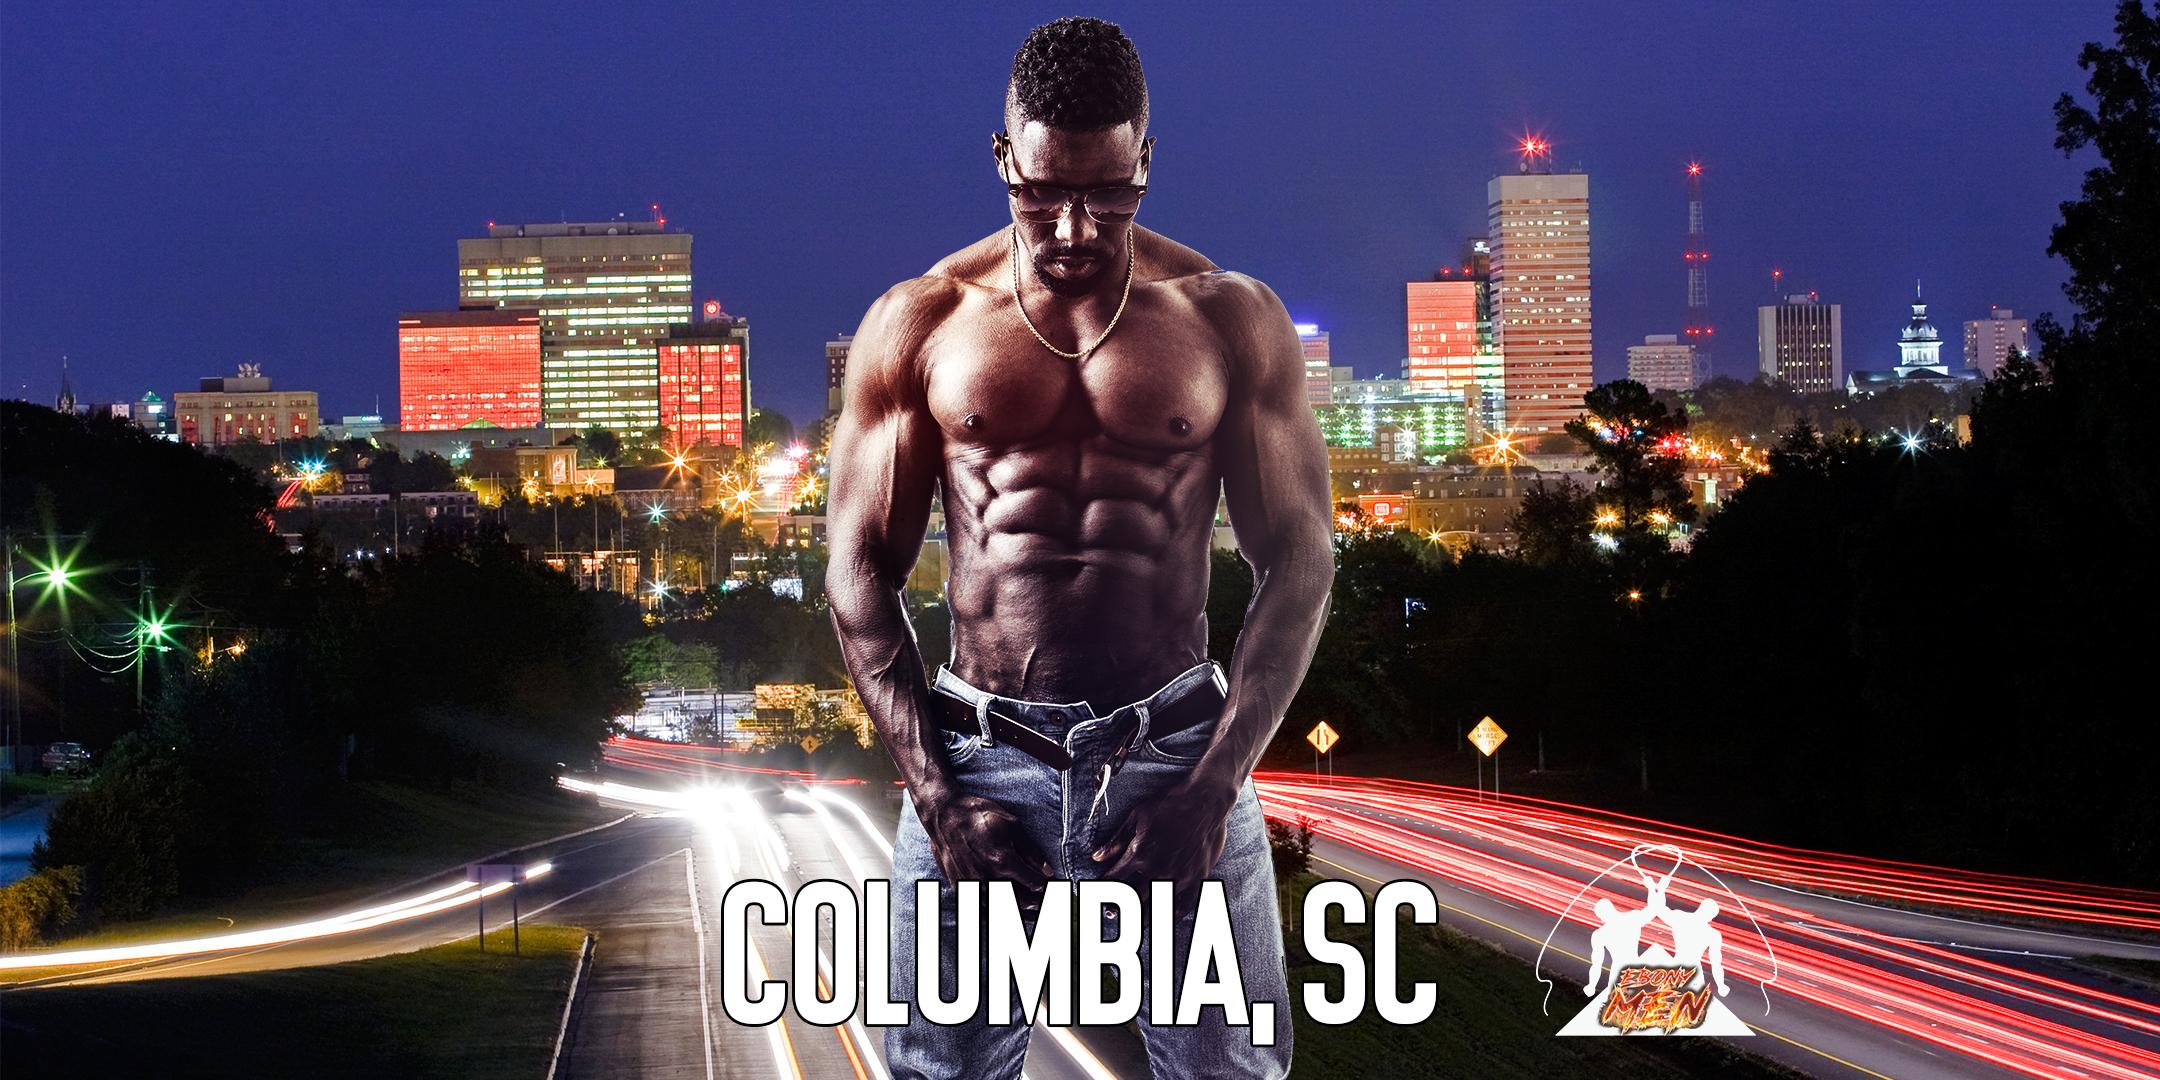 Ebony Men Black Male Revue Strip Clubs & Black Male Strippers Columbia SC  8-10PM - 9 MAY 2020